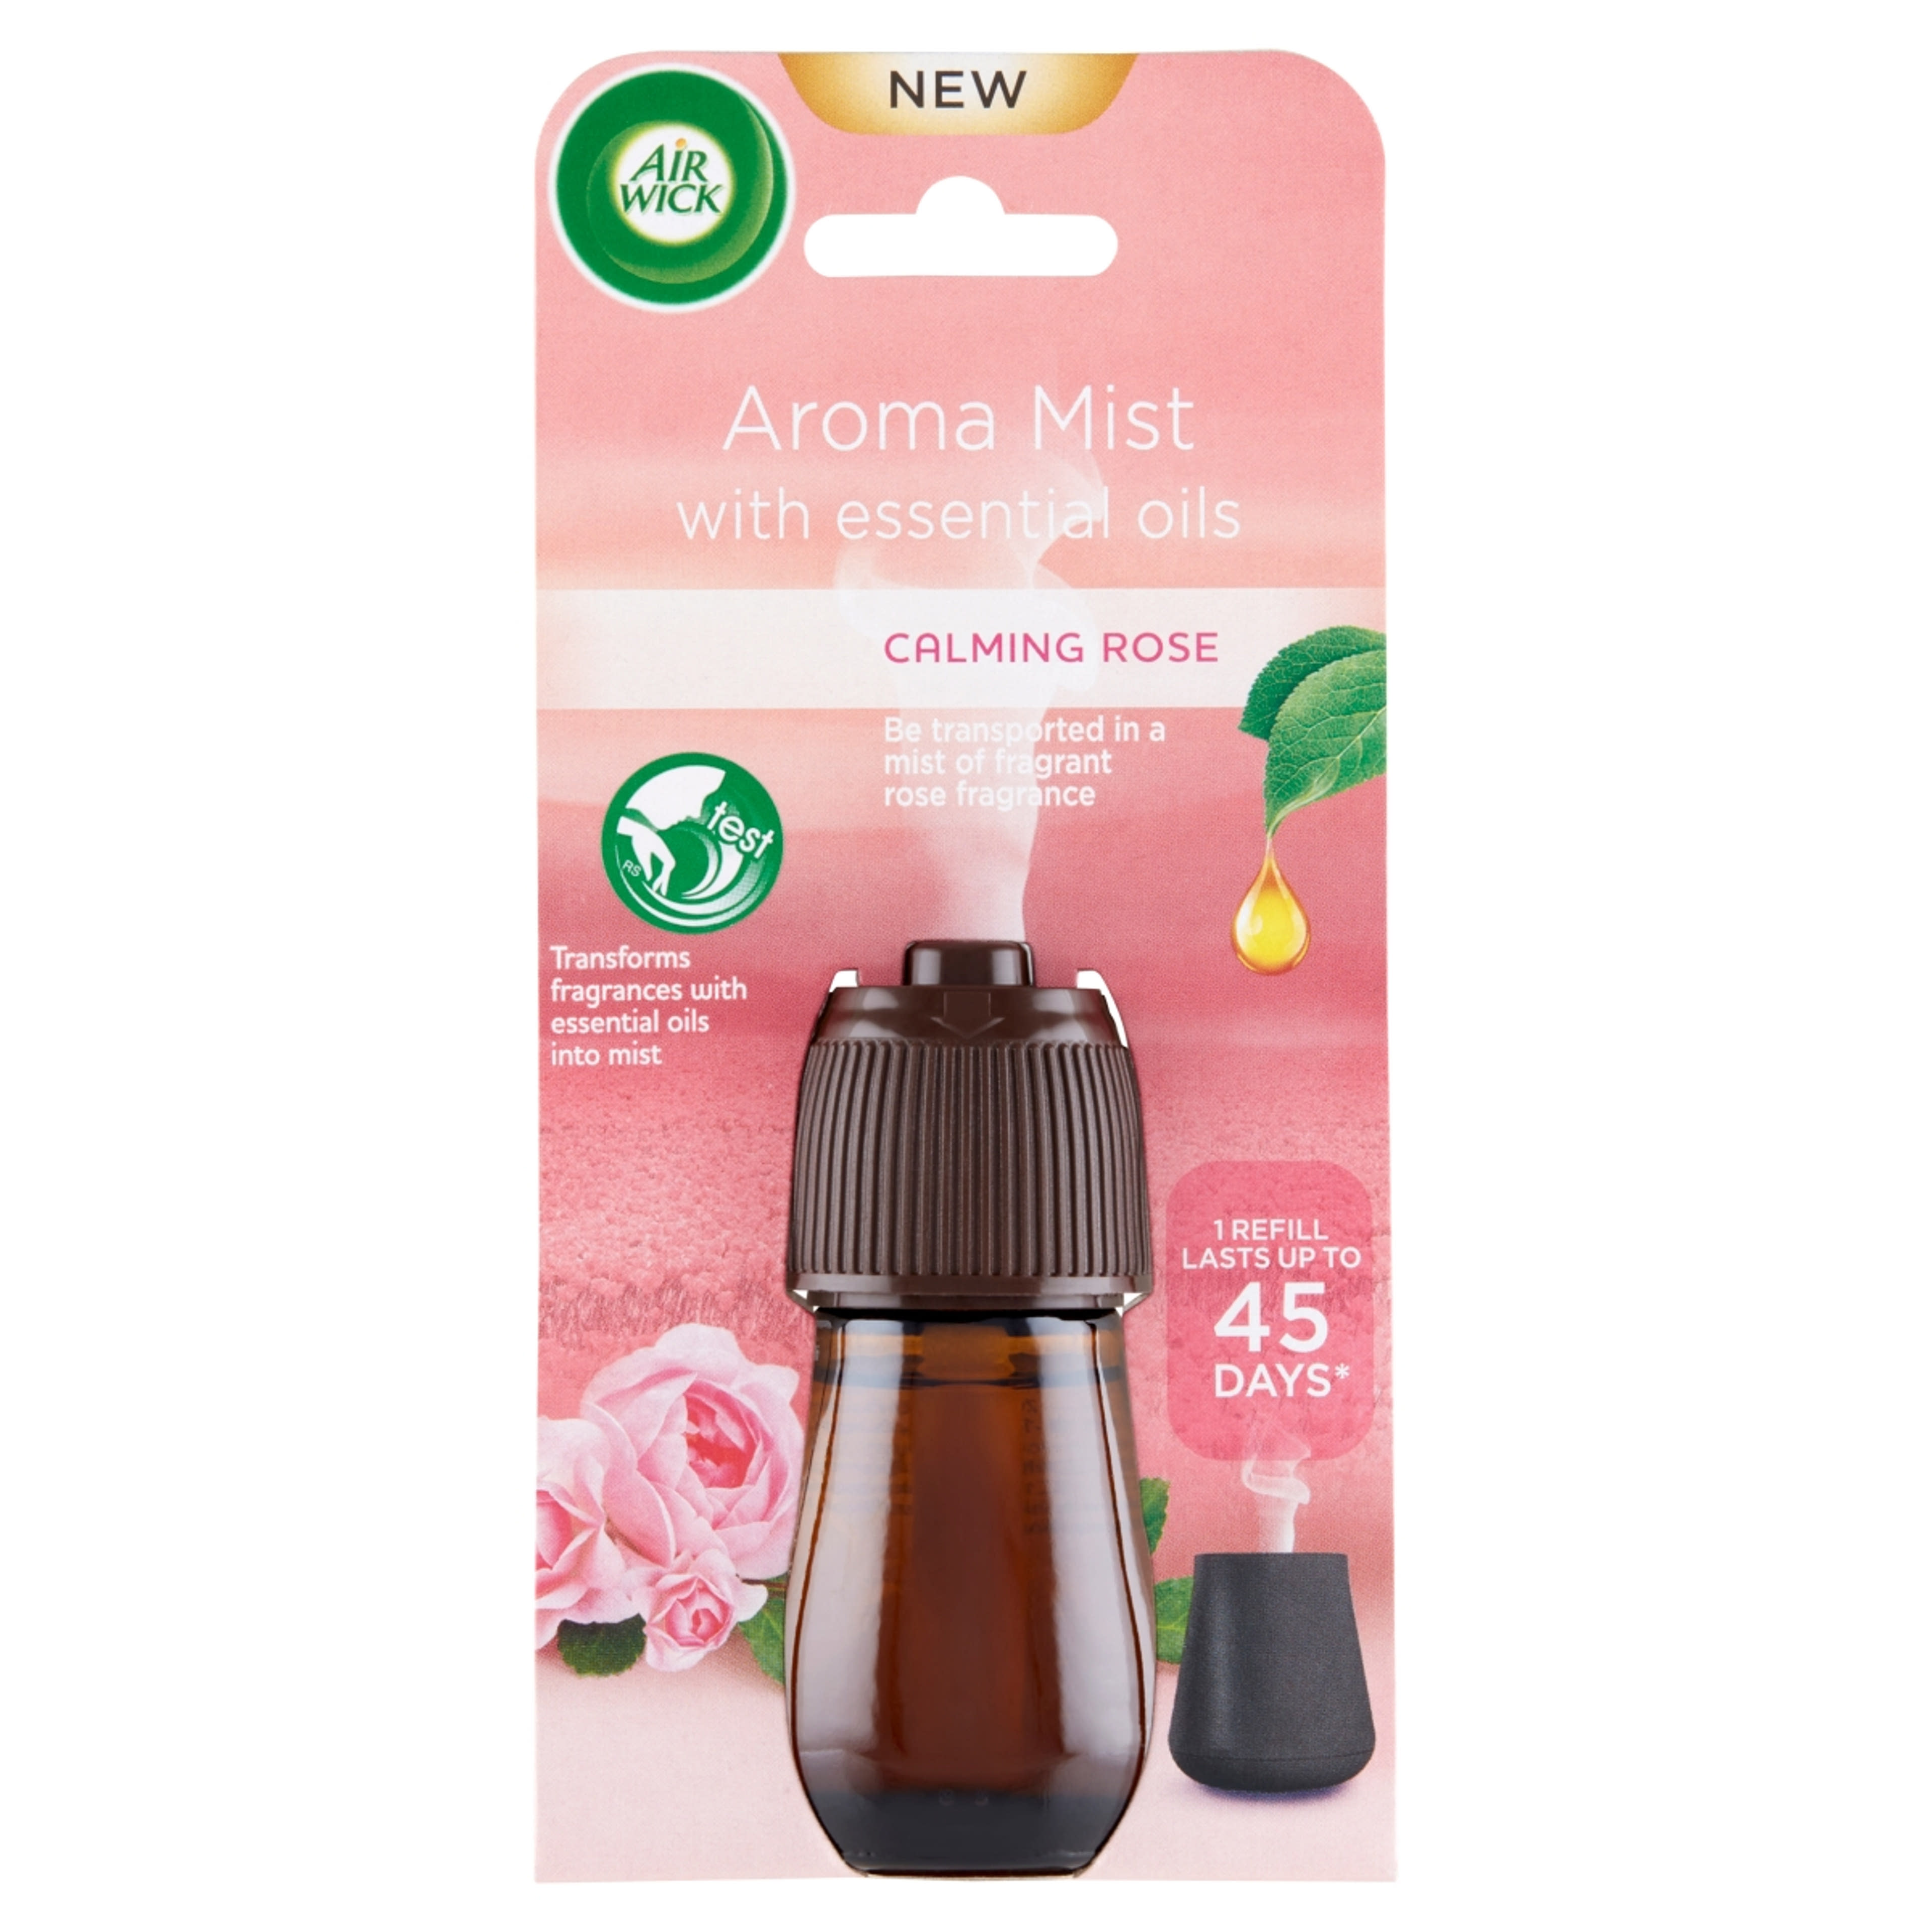 Air Wick Aroma Mist Nyugtató rózsa illat aroma diffúzor utántöltő - 20 ml-1